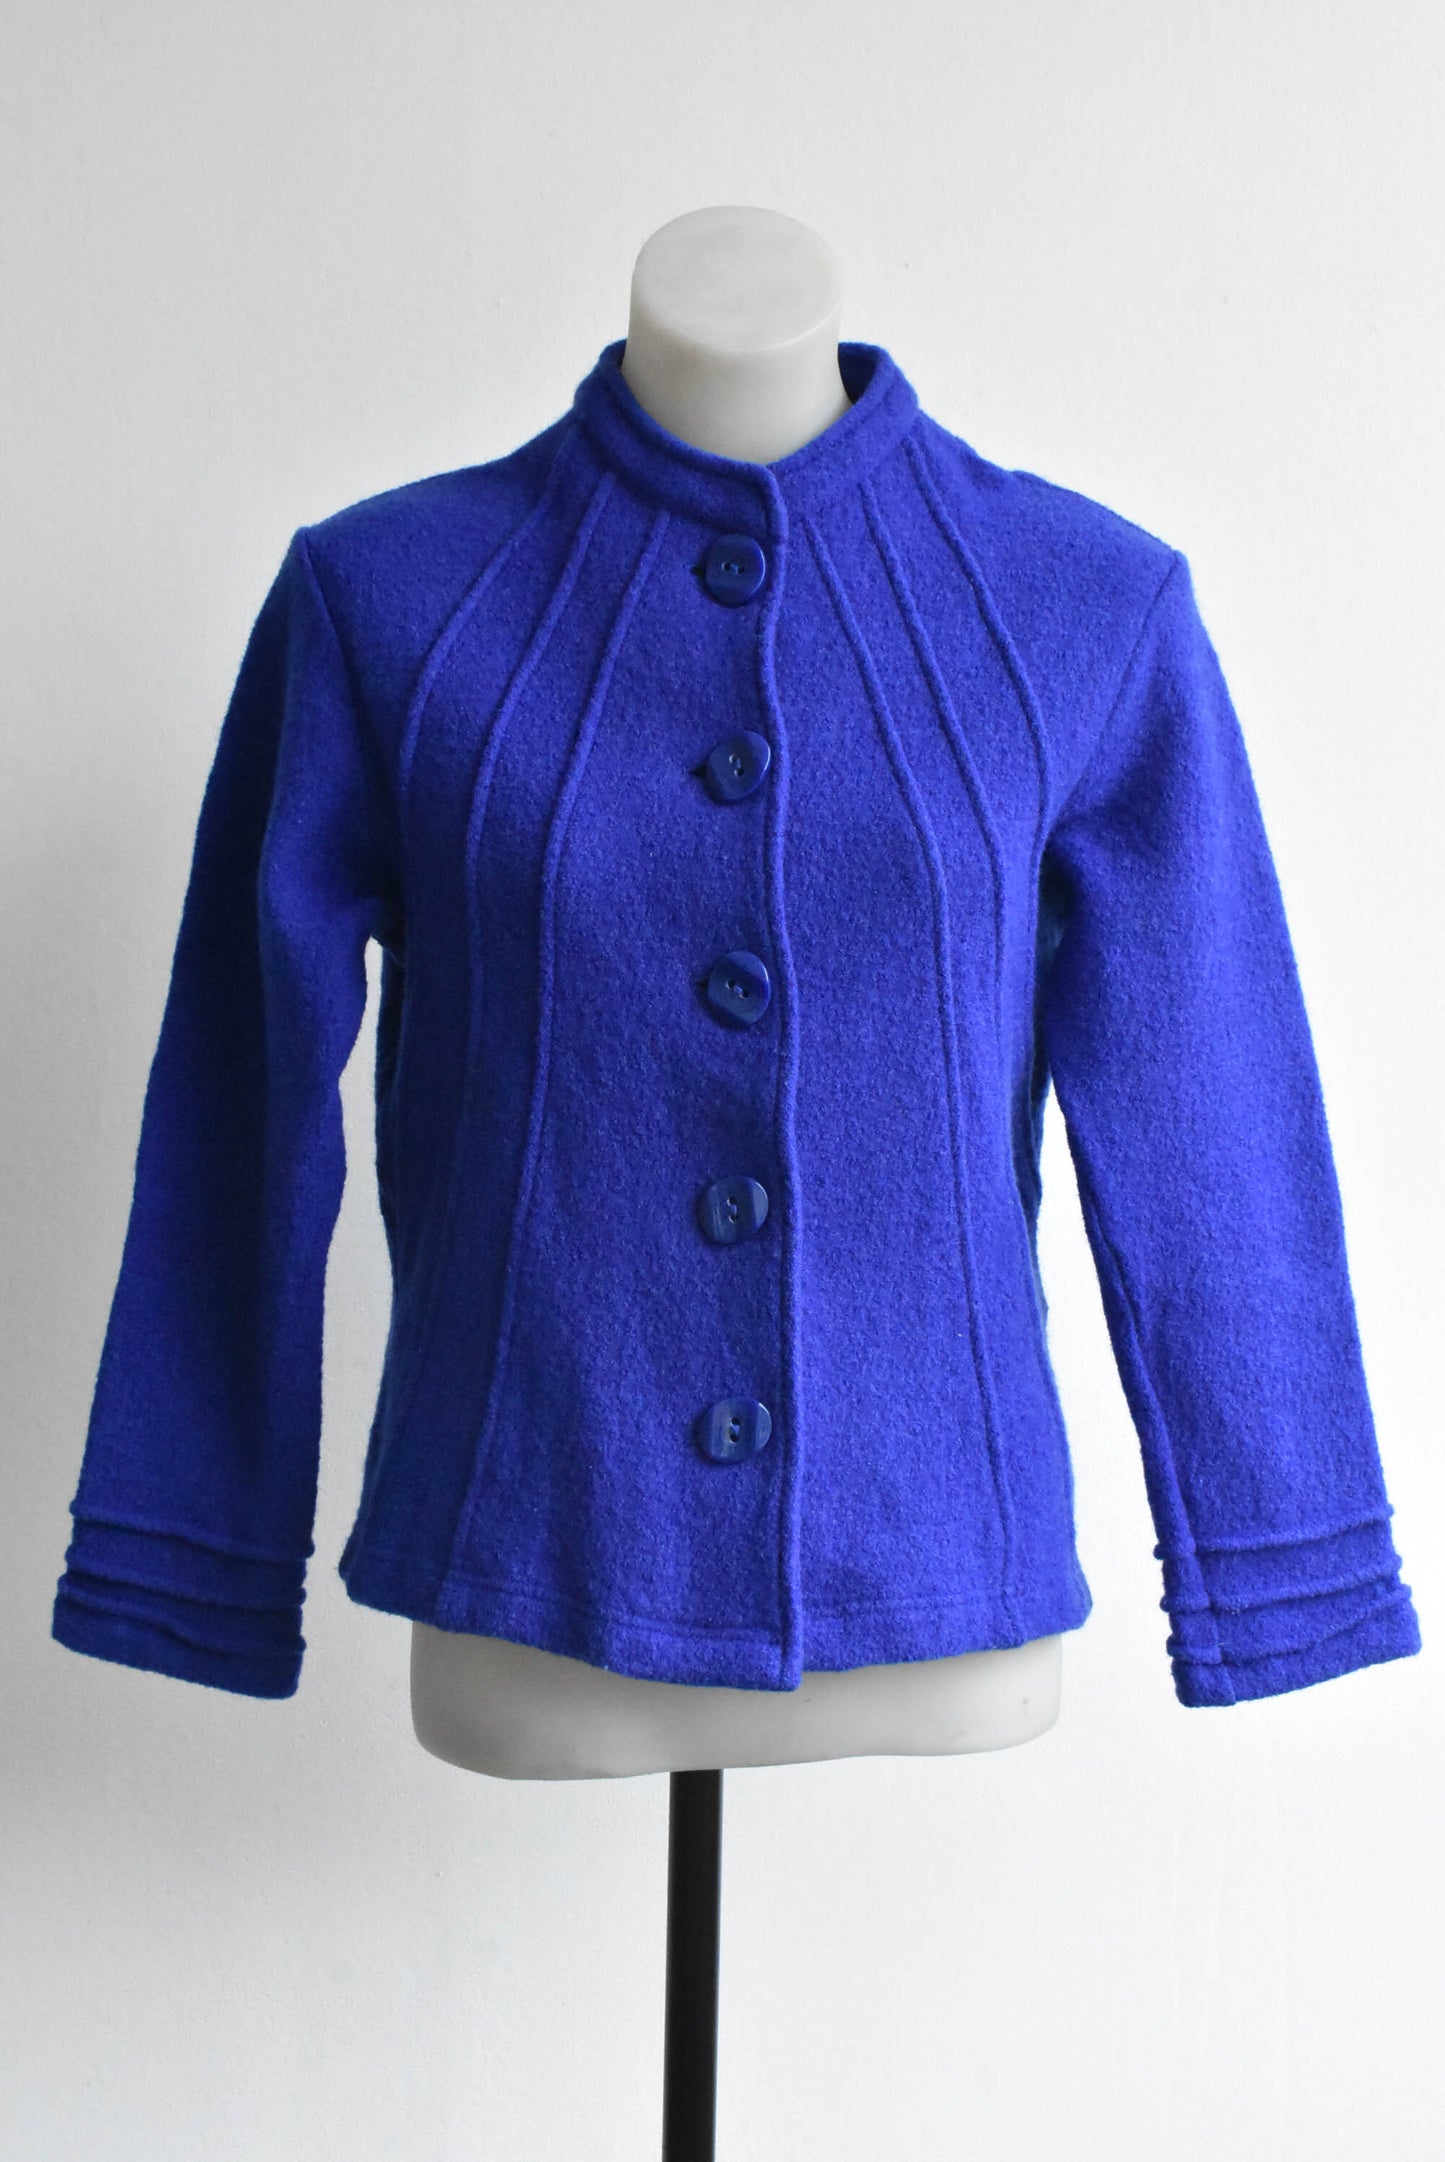 Black Pepper by Breakaway royal blue wool cardigan/jacket, size 10